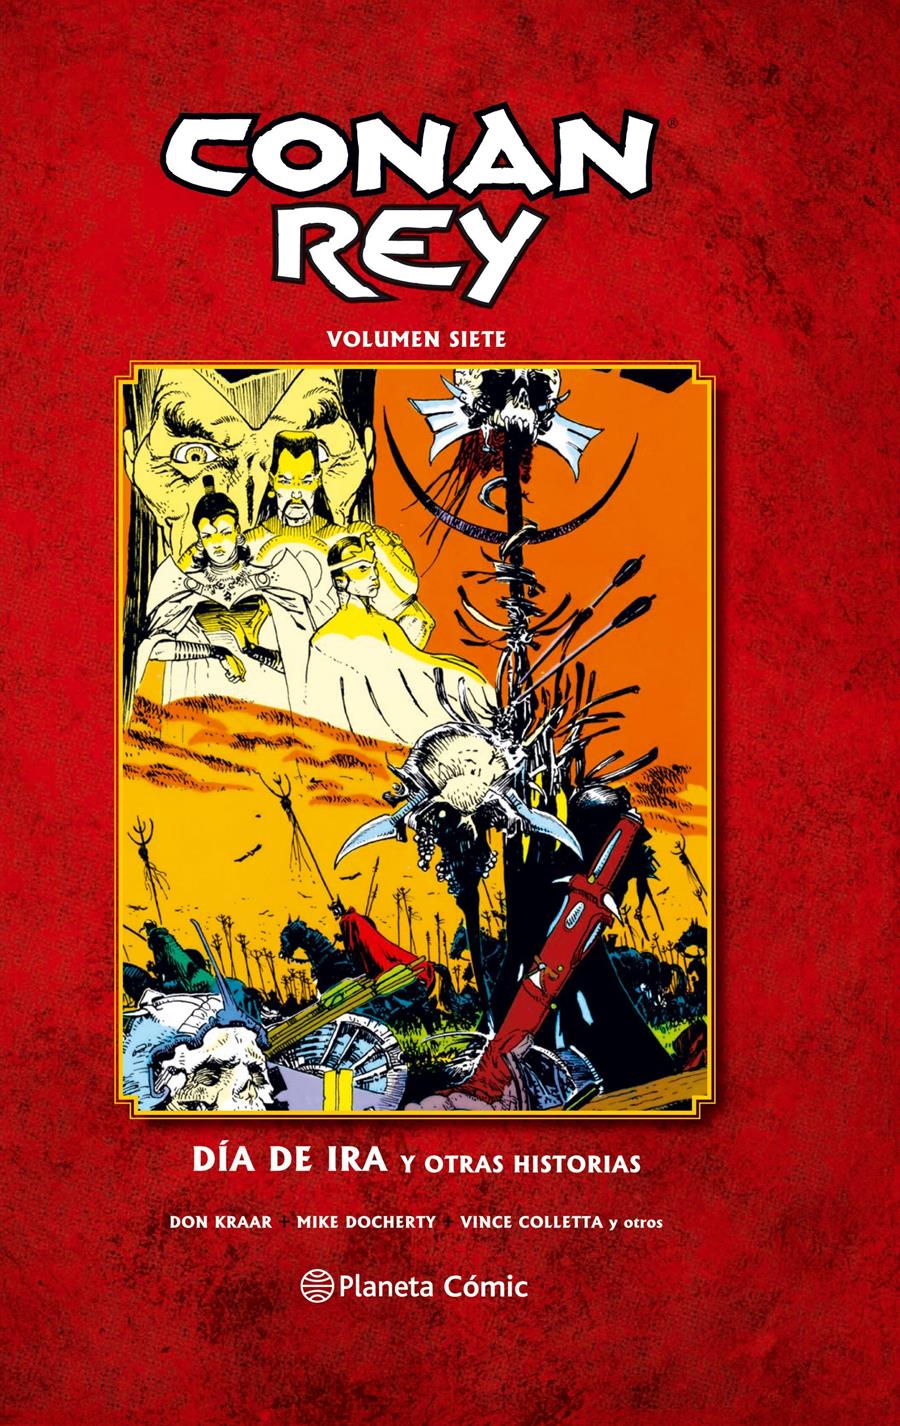 Conan Rey nº07 | N0817-PLAN03 | Varios Autores | Terra de Còmic - Tu tienda de cómics online especializada en cómics, manga y merchandising